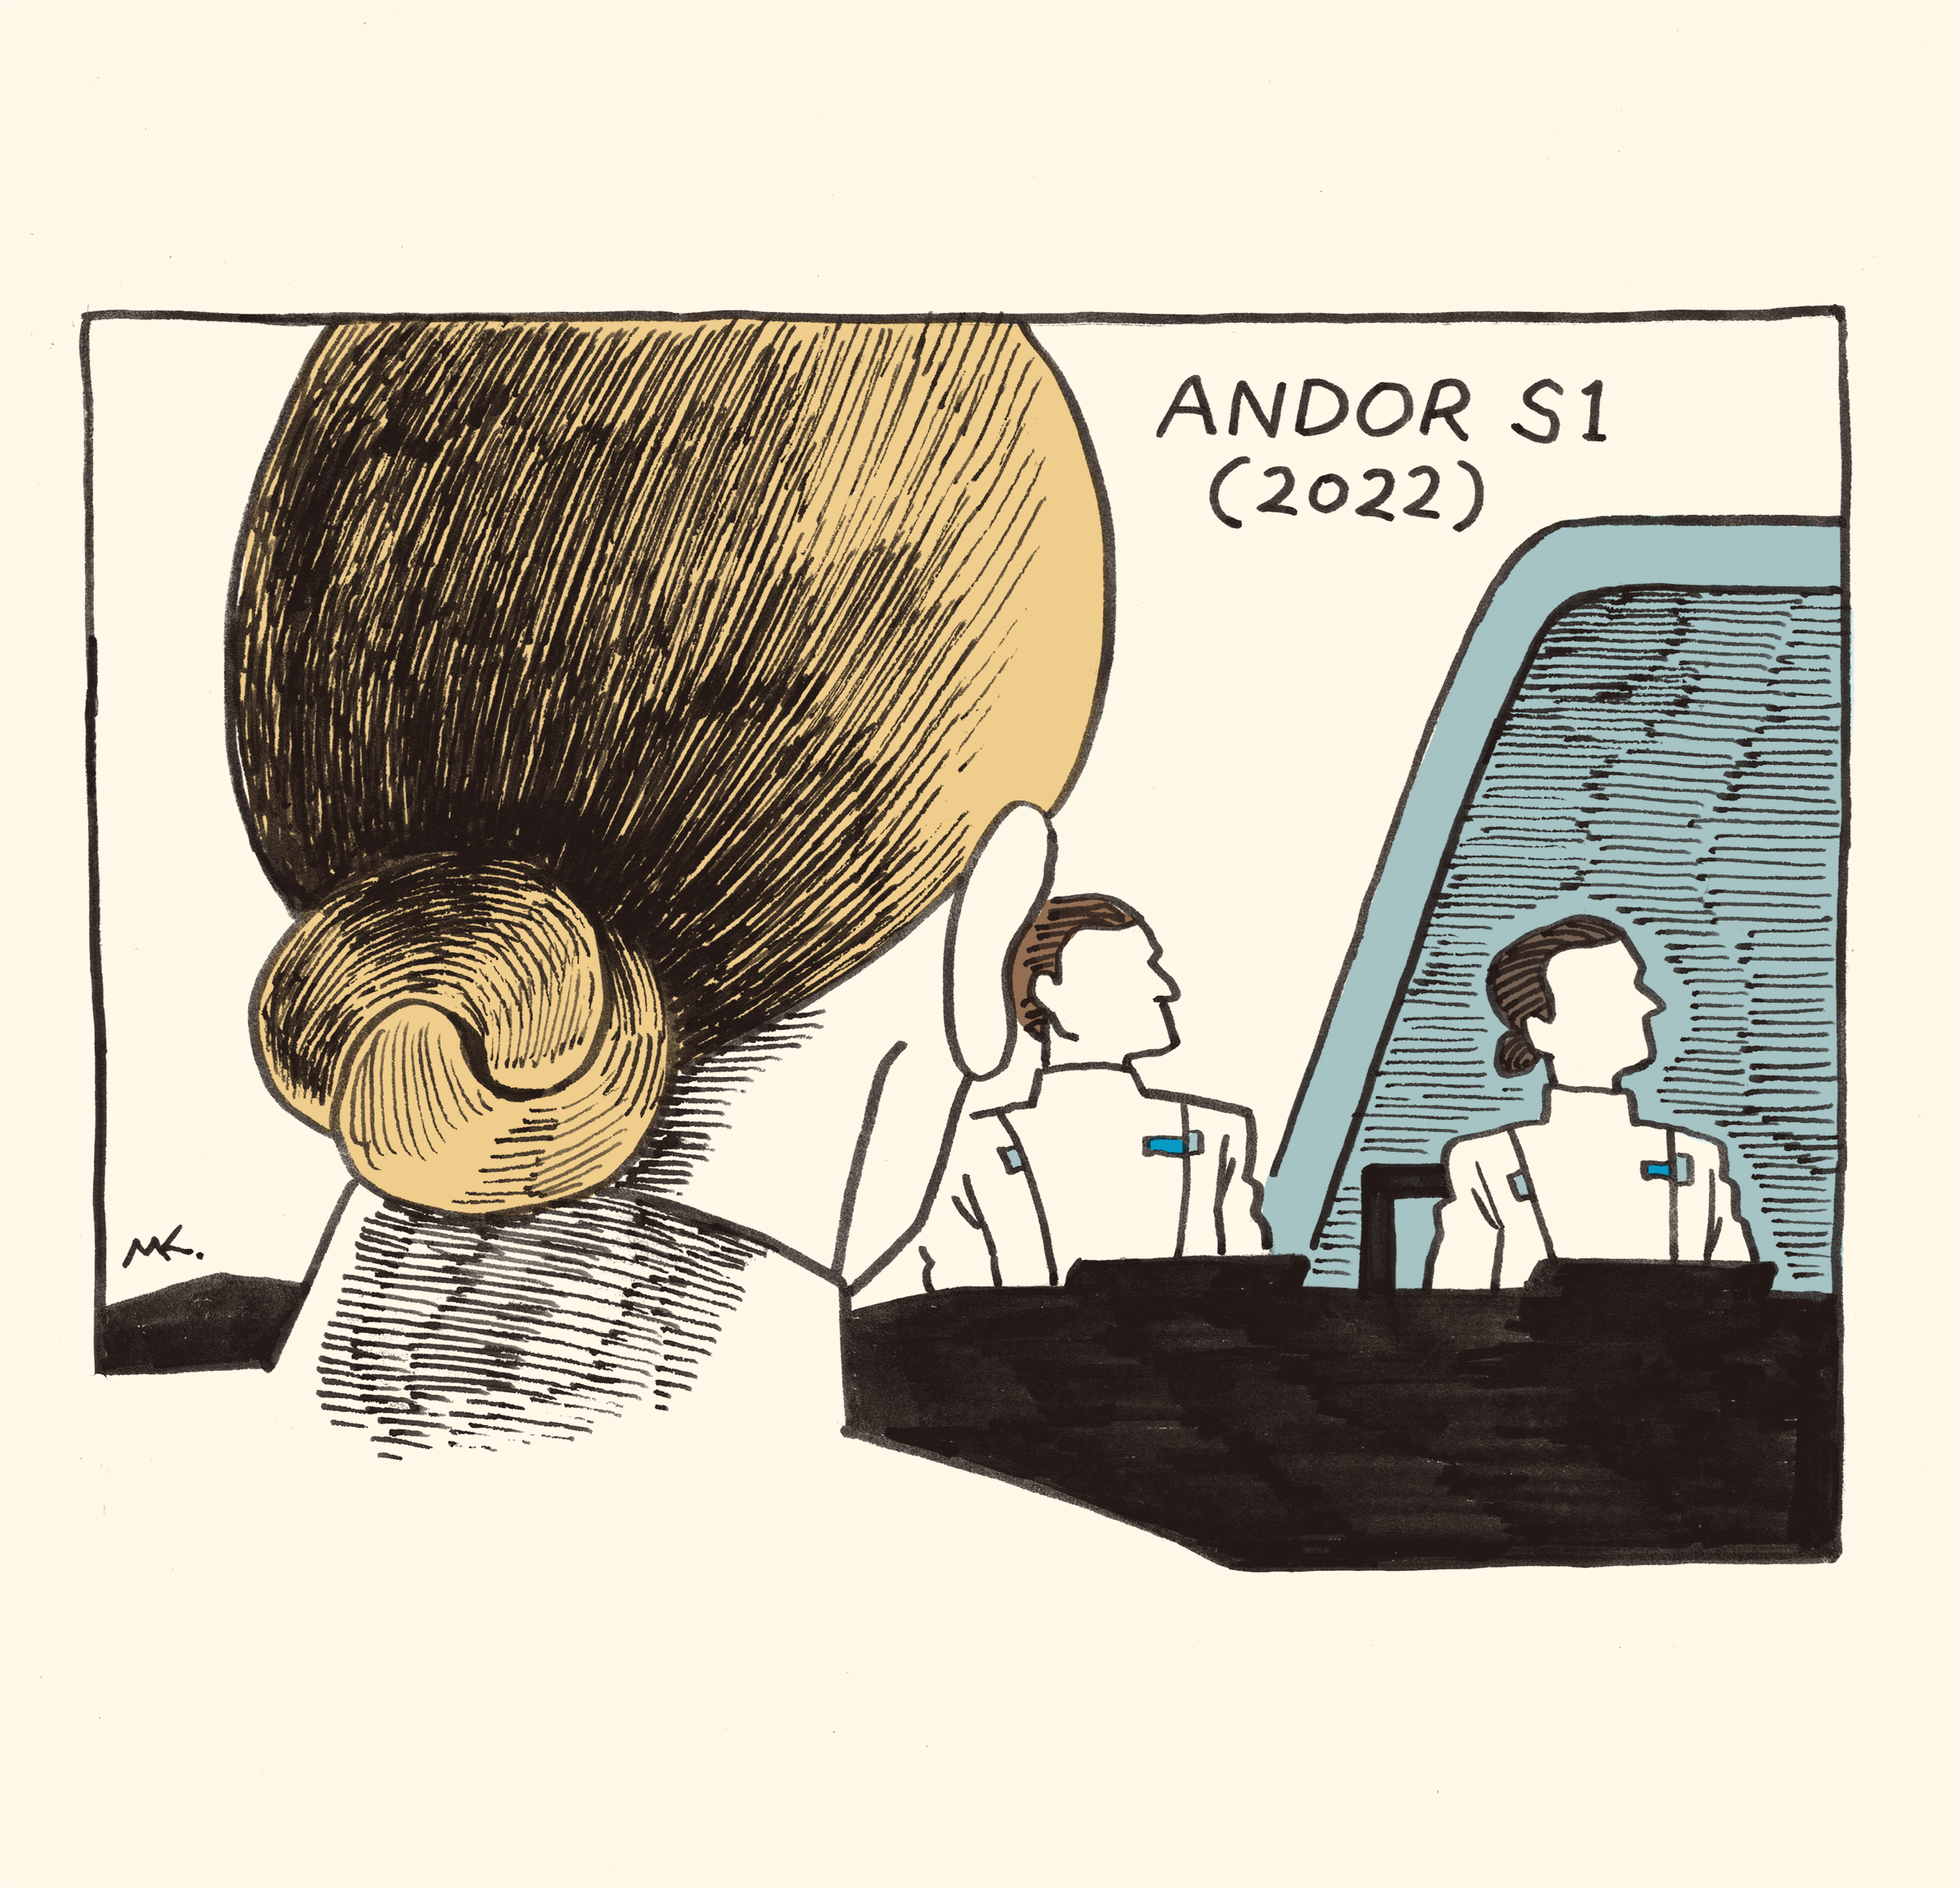 Andor S1 (2022)